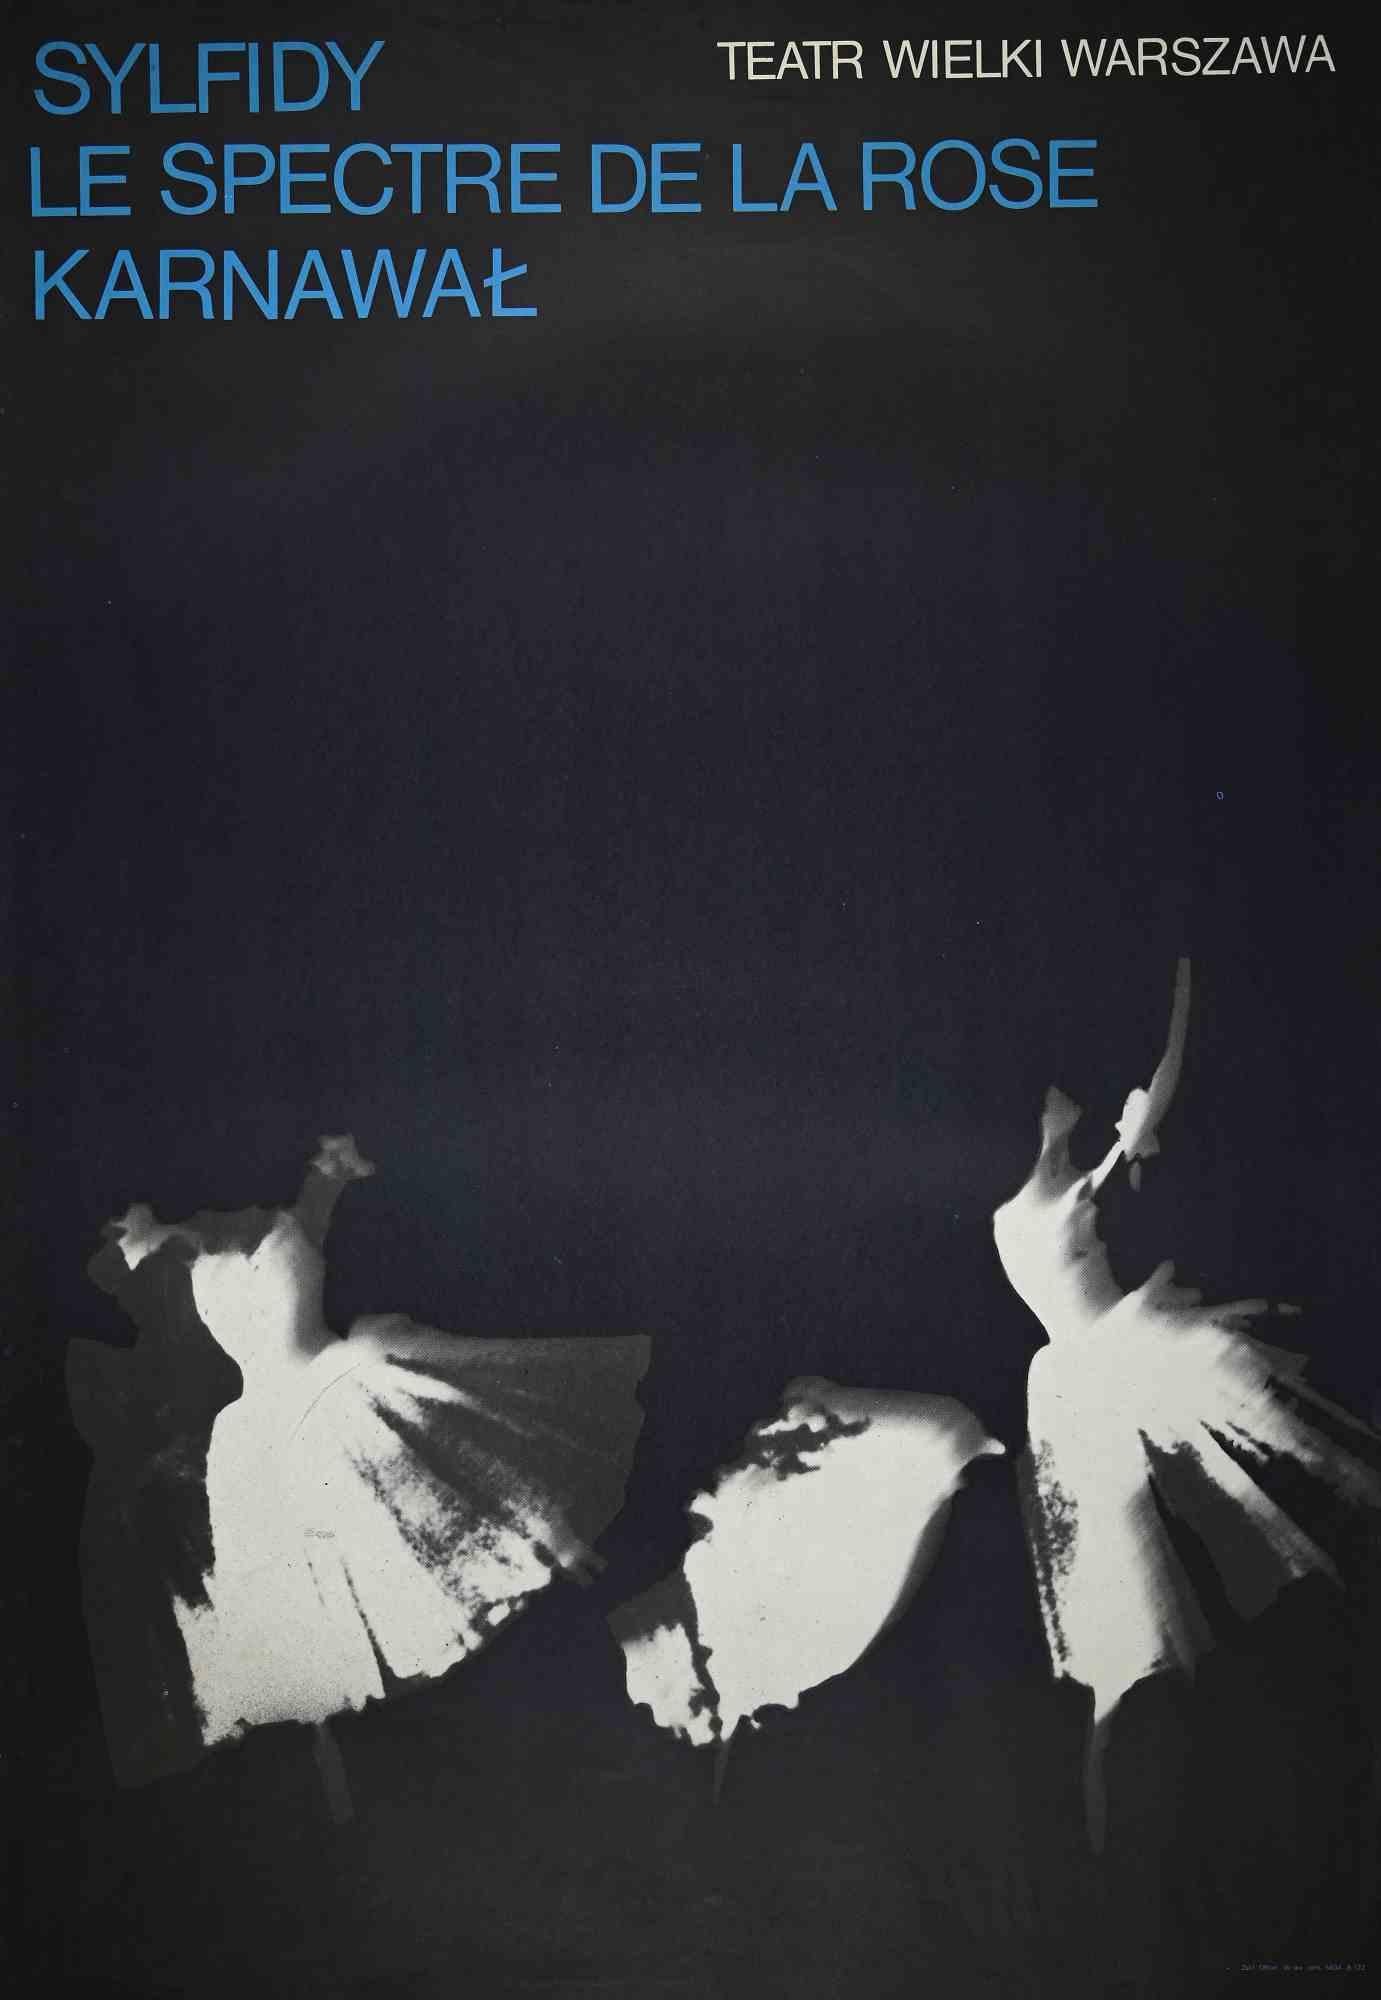 Sylfidy - Le Spectre De La Rose - Karnawal - Poster d'epoca - 1974